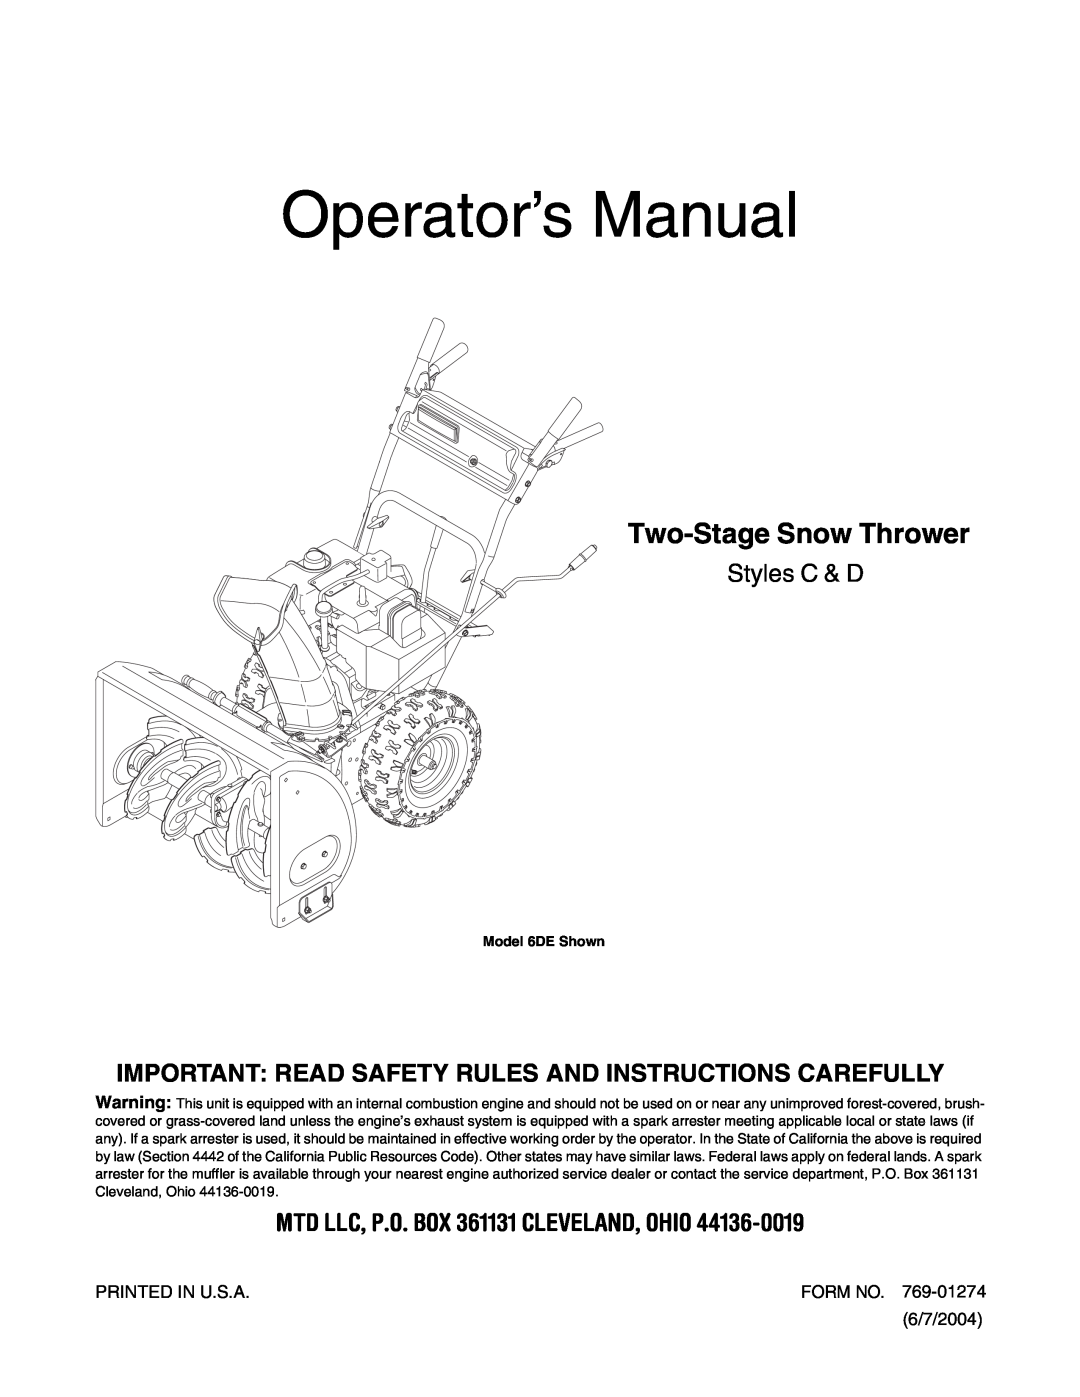 MTD 6DE manual Operator’s Manual, Two-StageSnow Thrower, Styles C & D, MTD LLC, P.O. BOX 361131 CLEVELAND, OHIO 